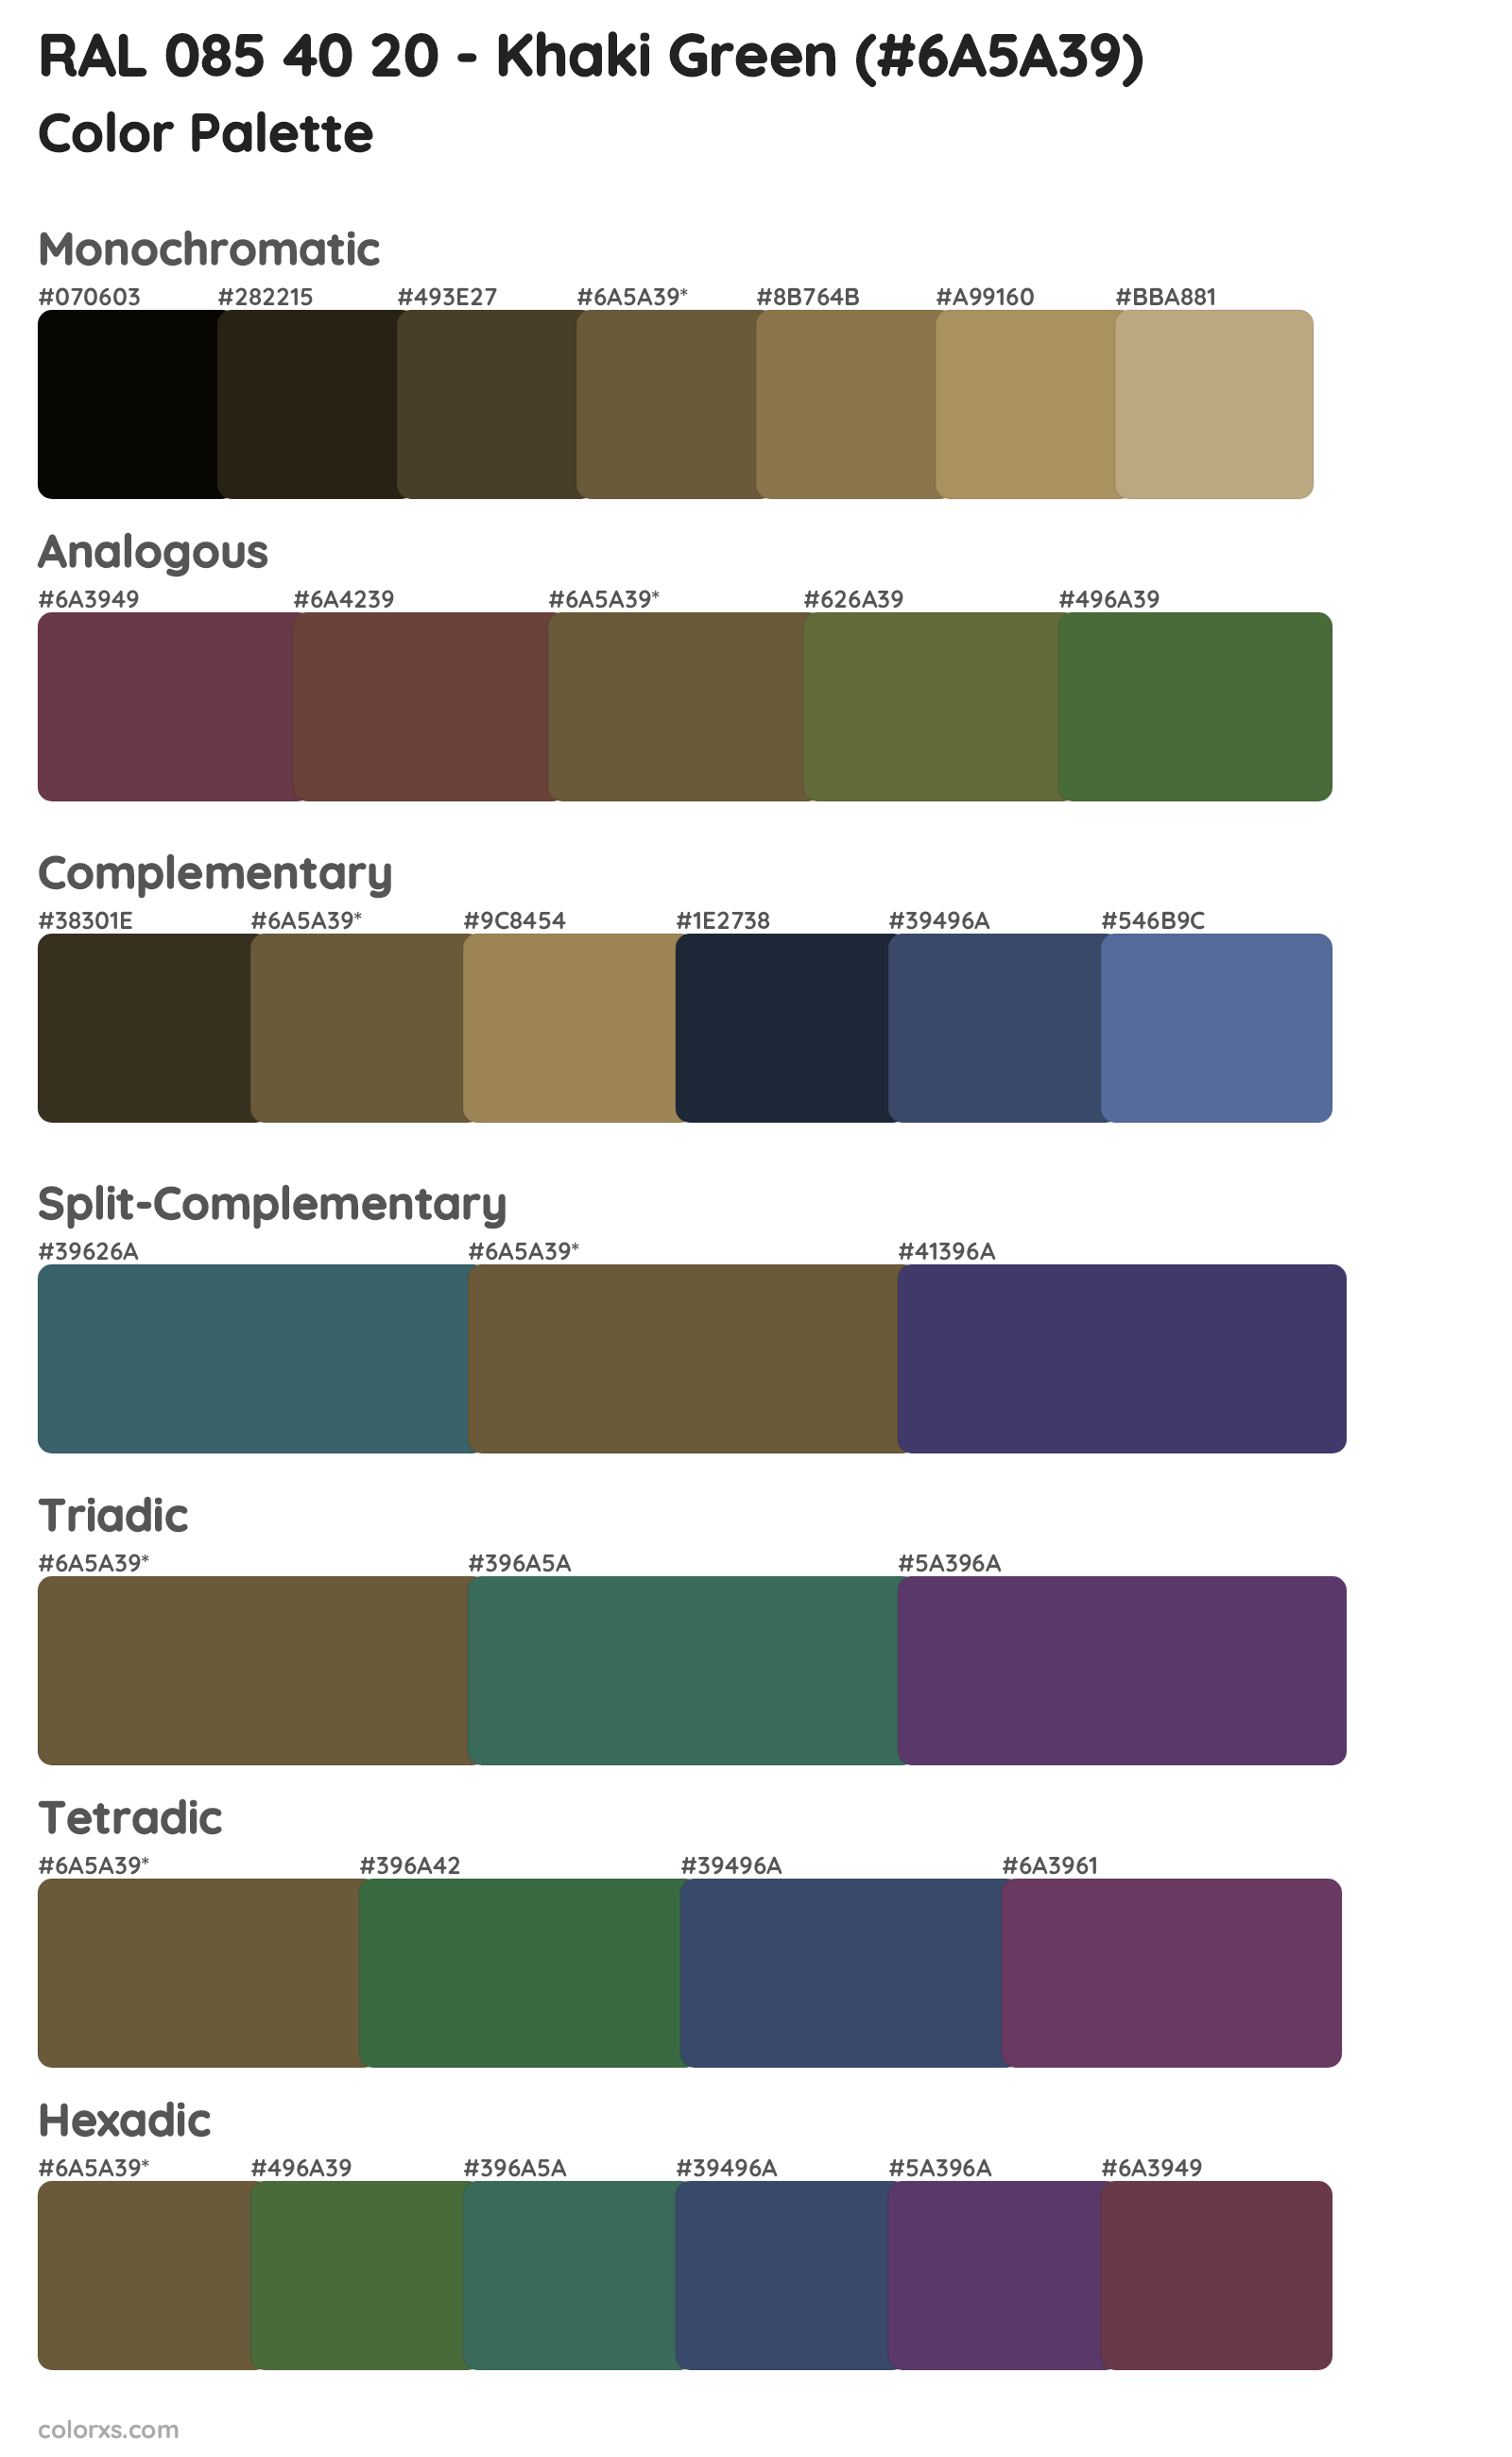 RAL 085 40 20 - Khaki Green Color Scheme Palettes